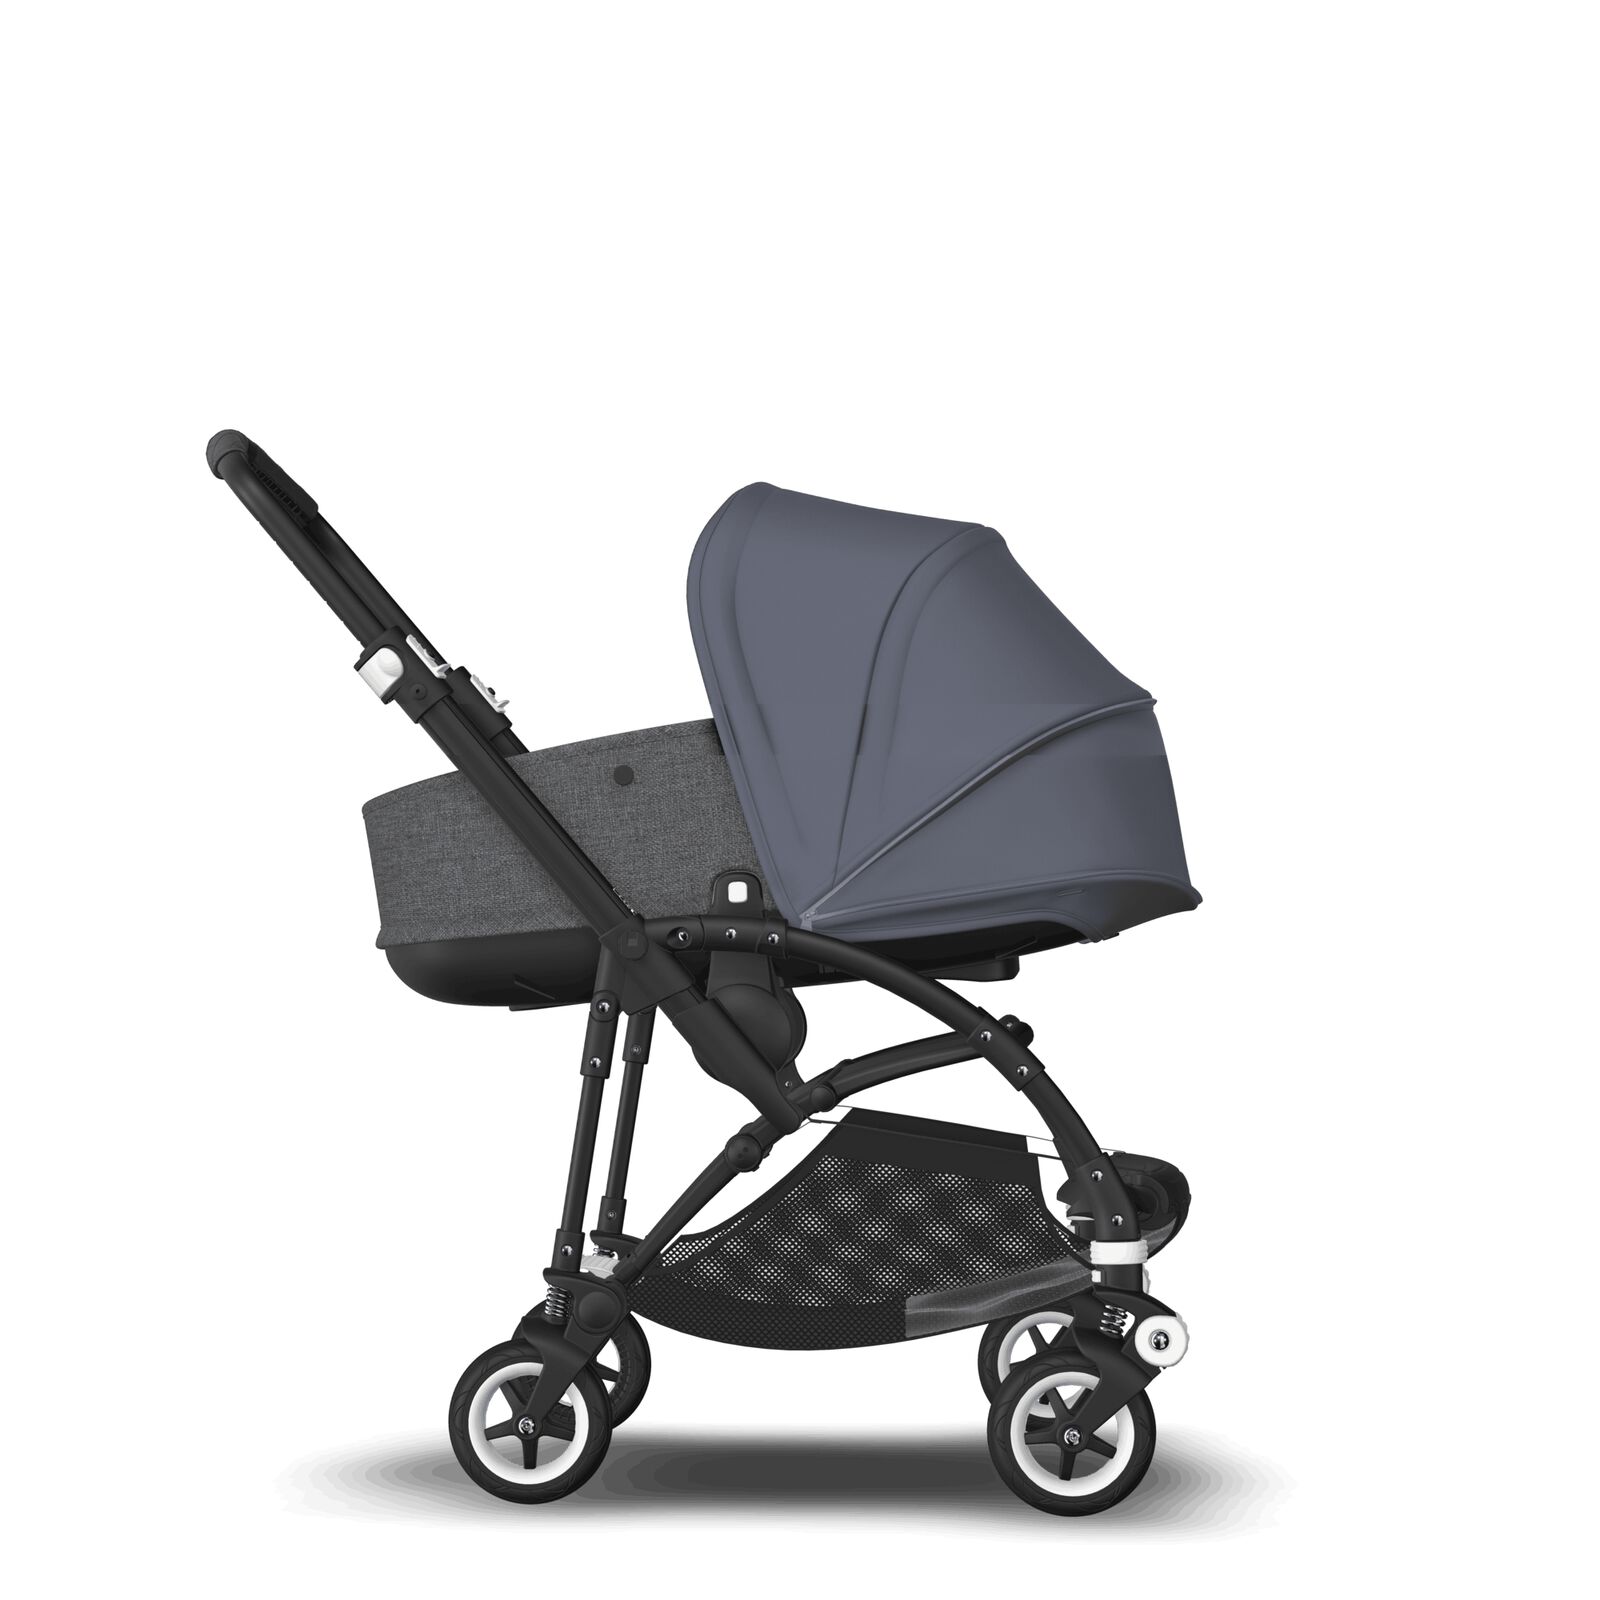 Bugaboo Bee 5 seat and bassinet stroller steel blue sun canopy, grey melange fabrics, black base